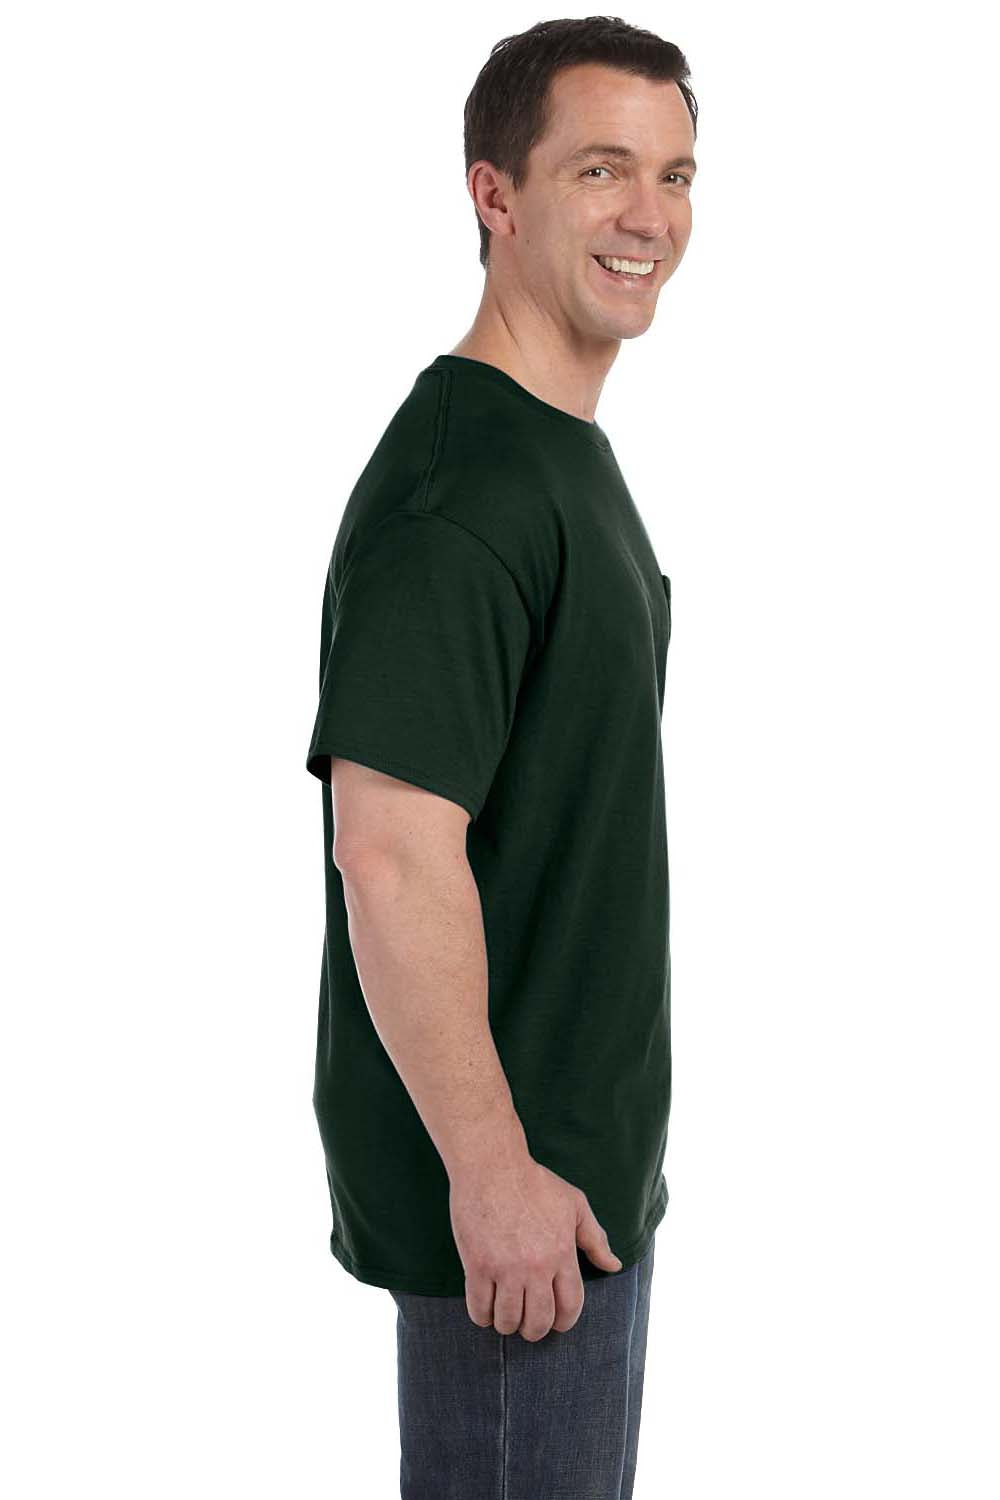 Hanes H5590 Mens ComfortSoft Short Sleeve Crewneck T-Shirt w/ Pocket Forest Green Side